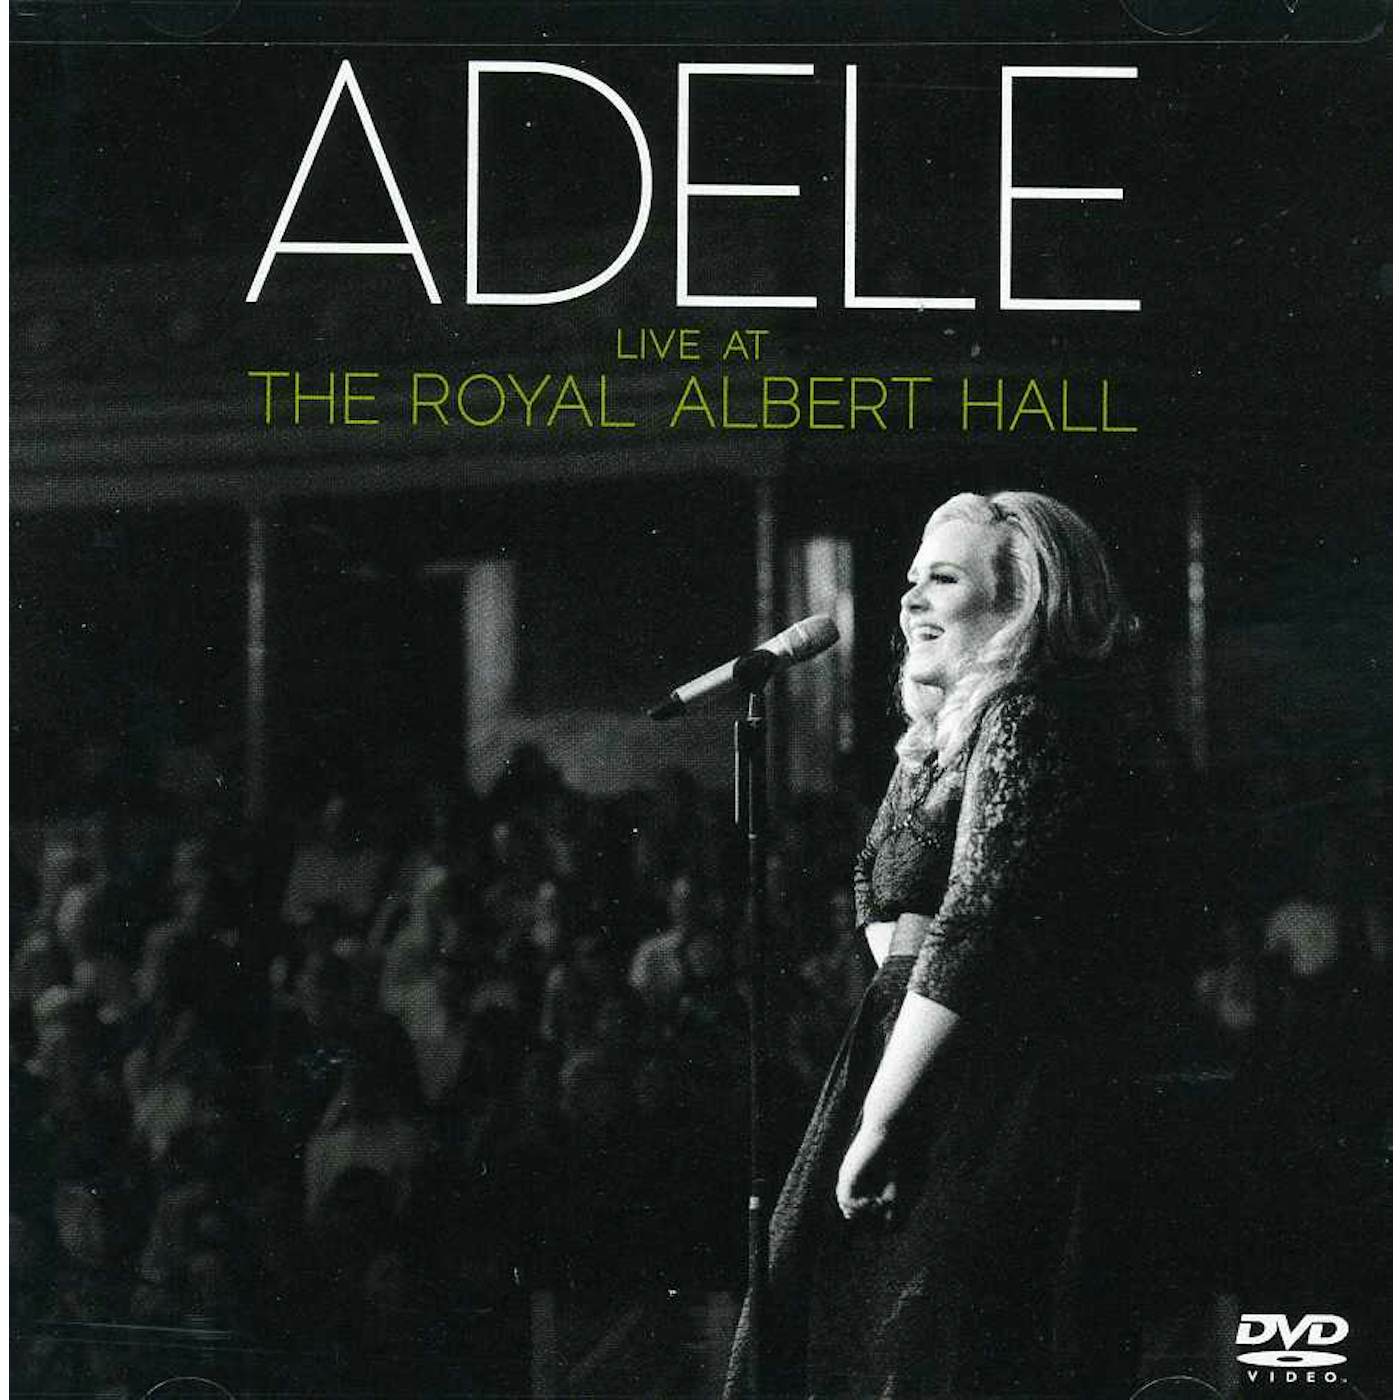 Adele LIVE AT THE ROYAL ALBERT HALL DVD